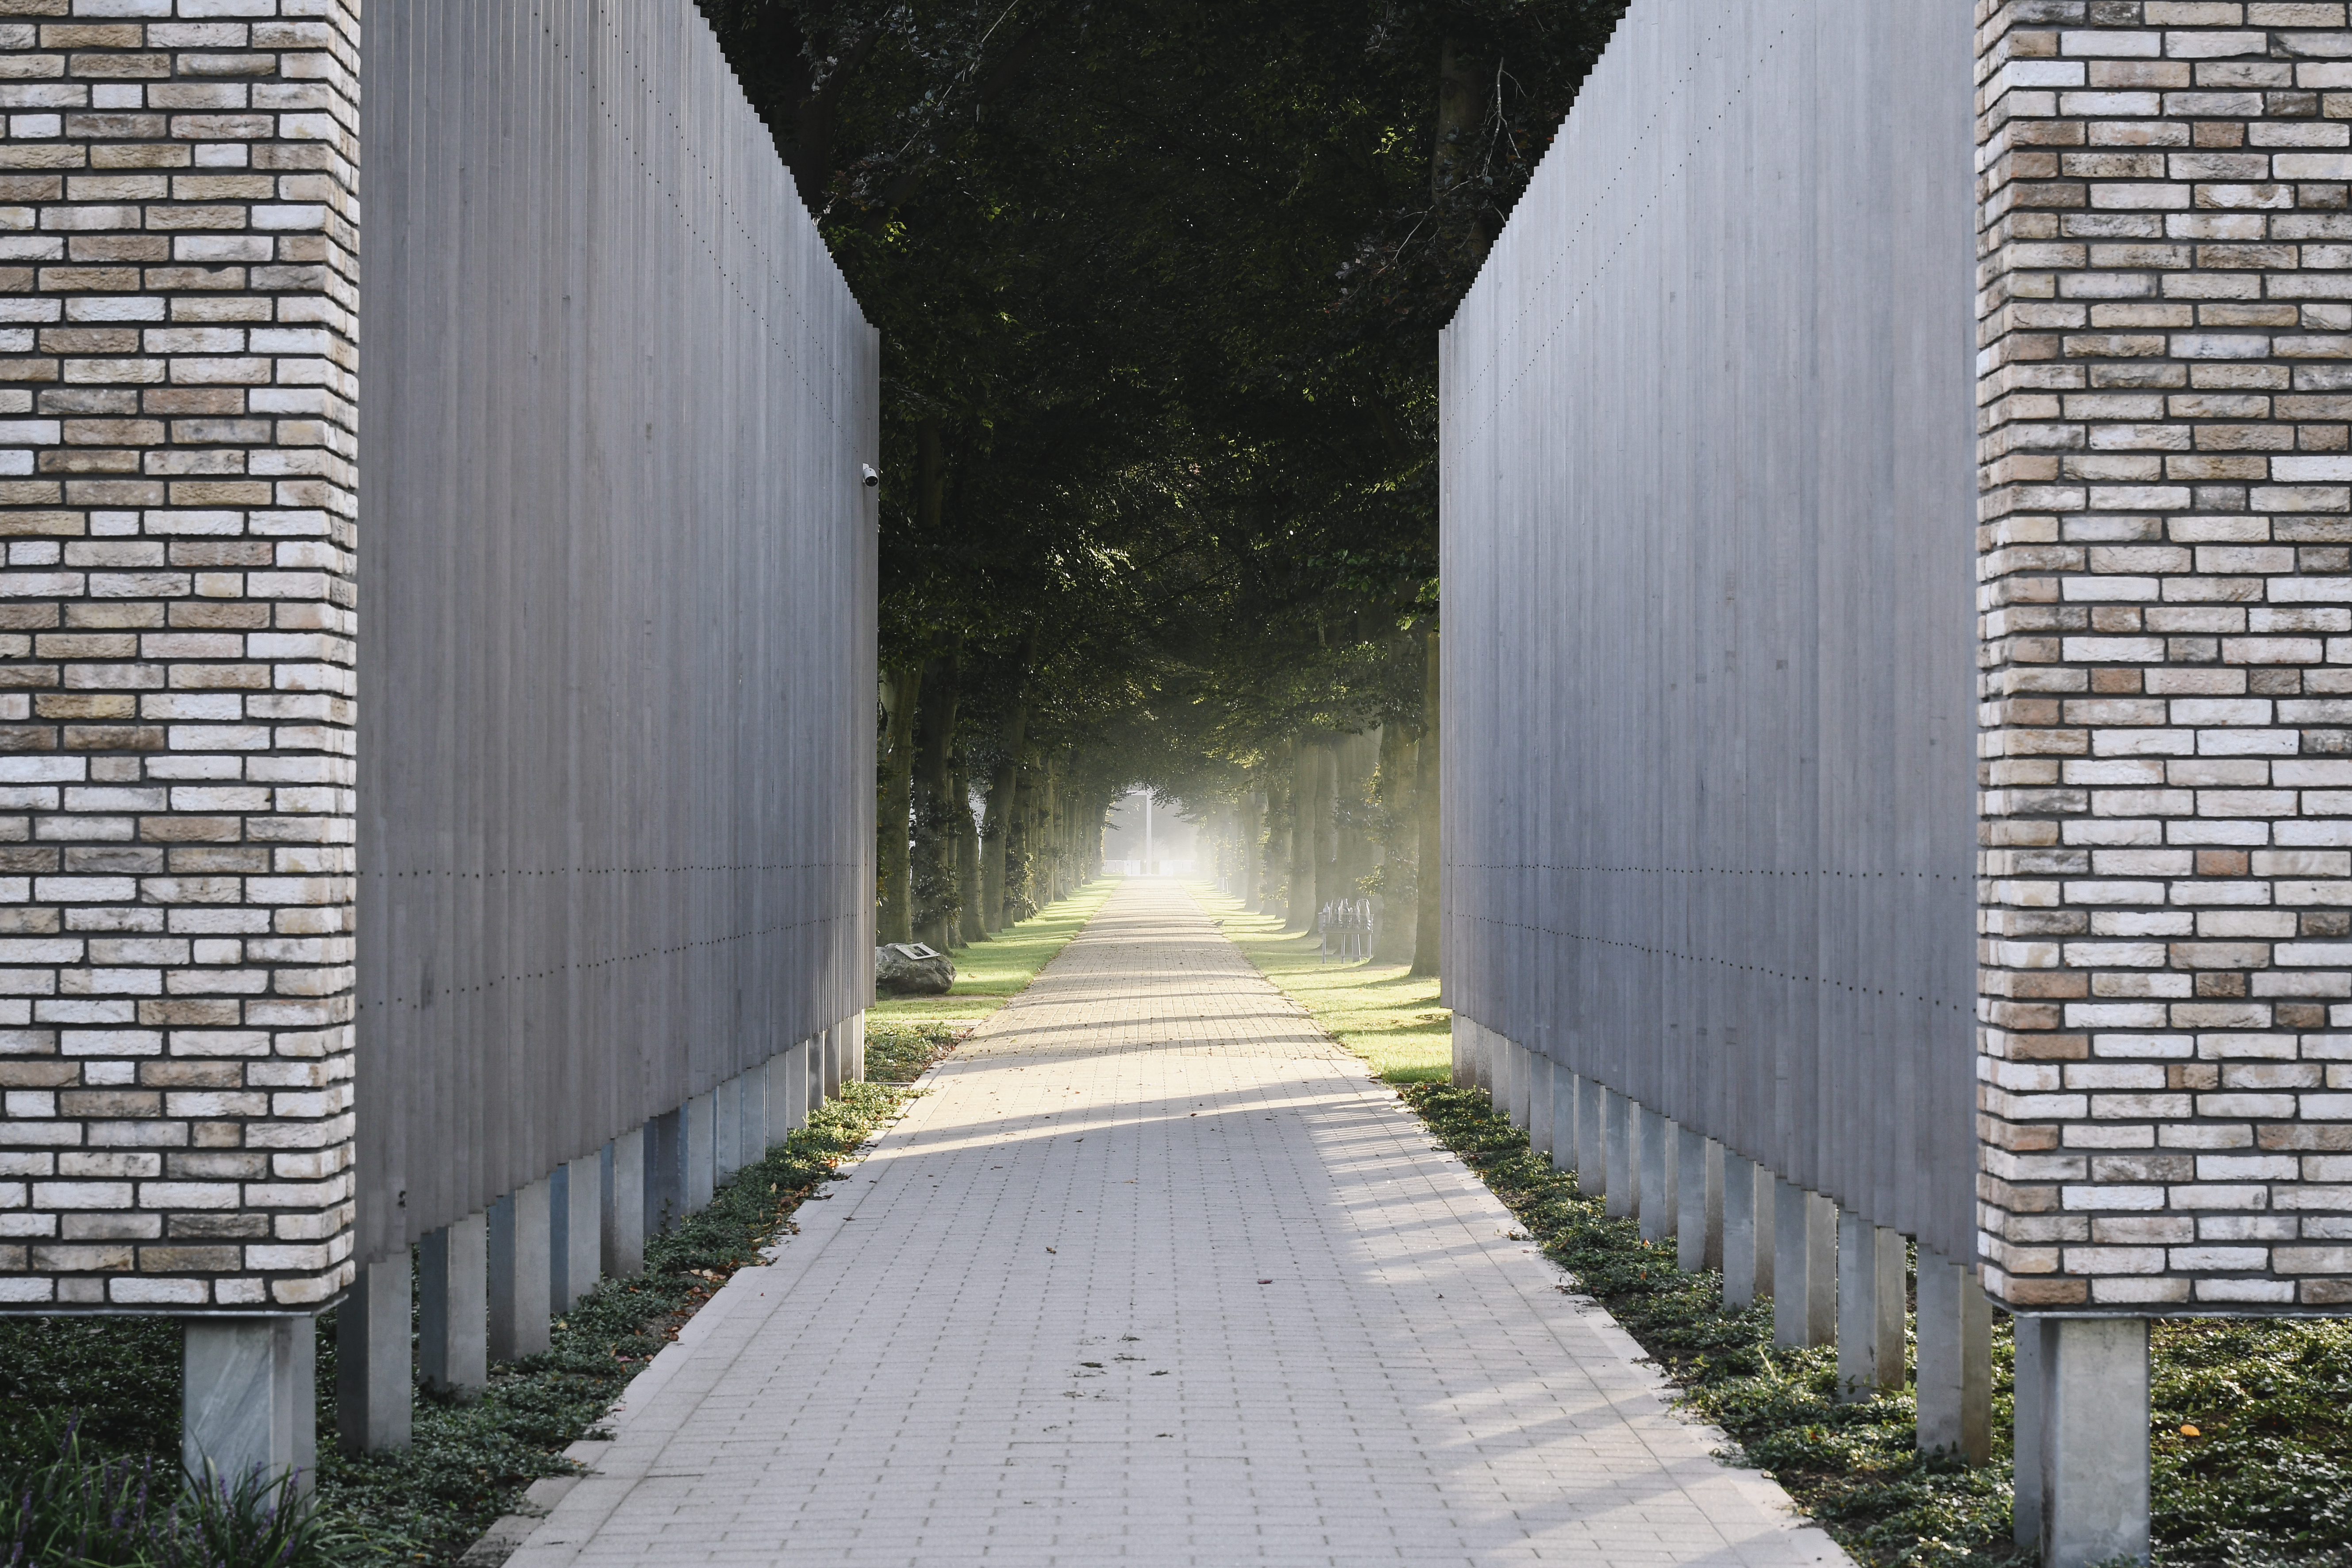 Virtual visit to the Ysselsteyn War Cemetery